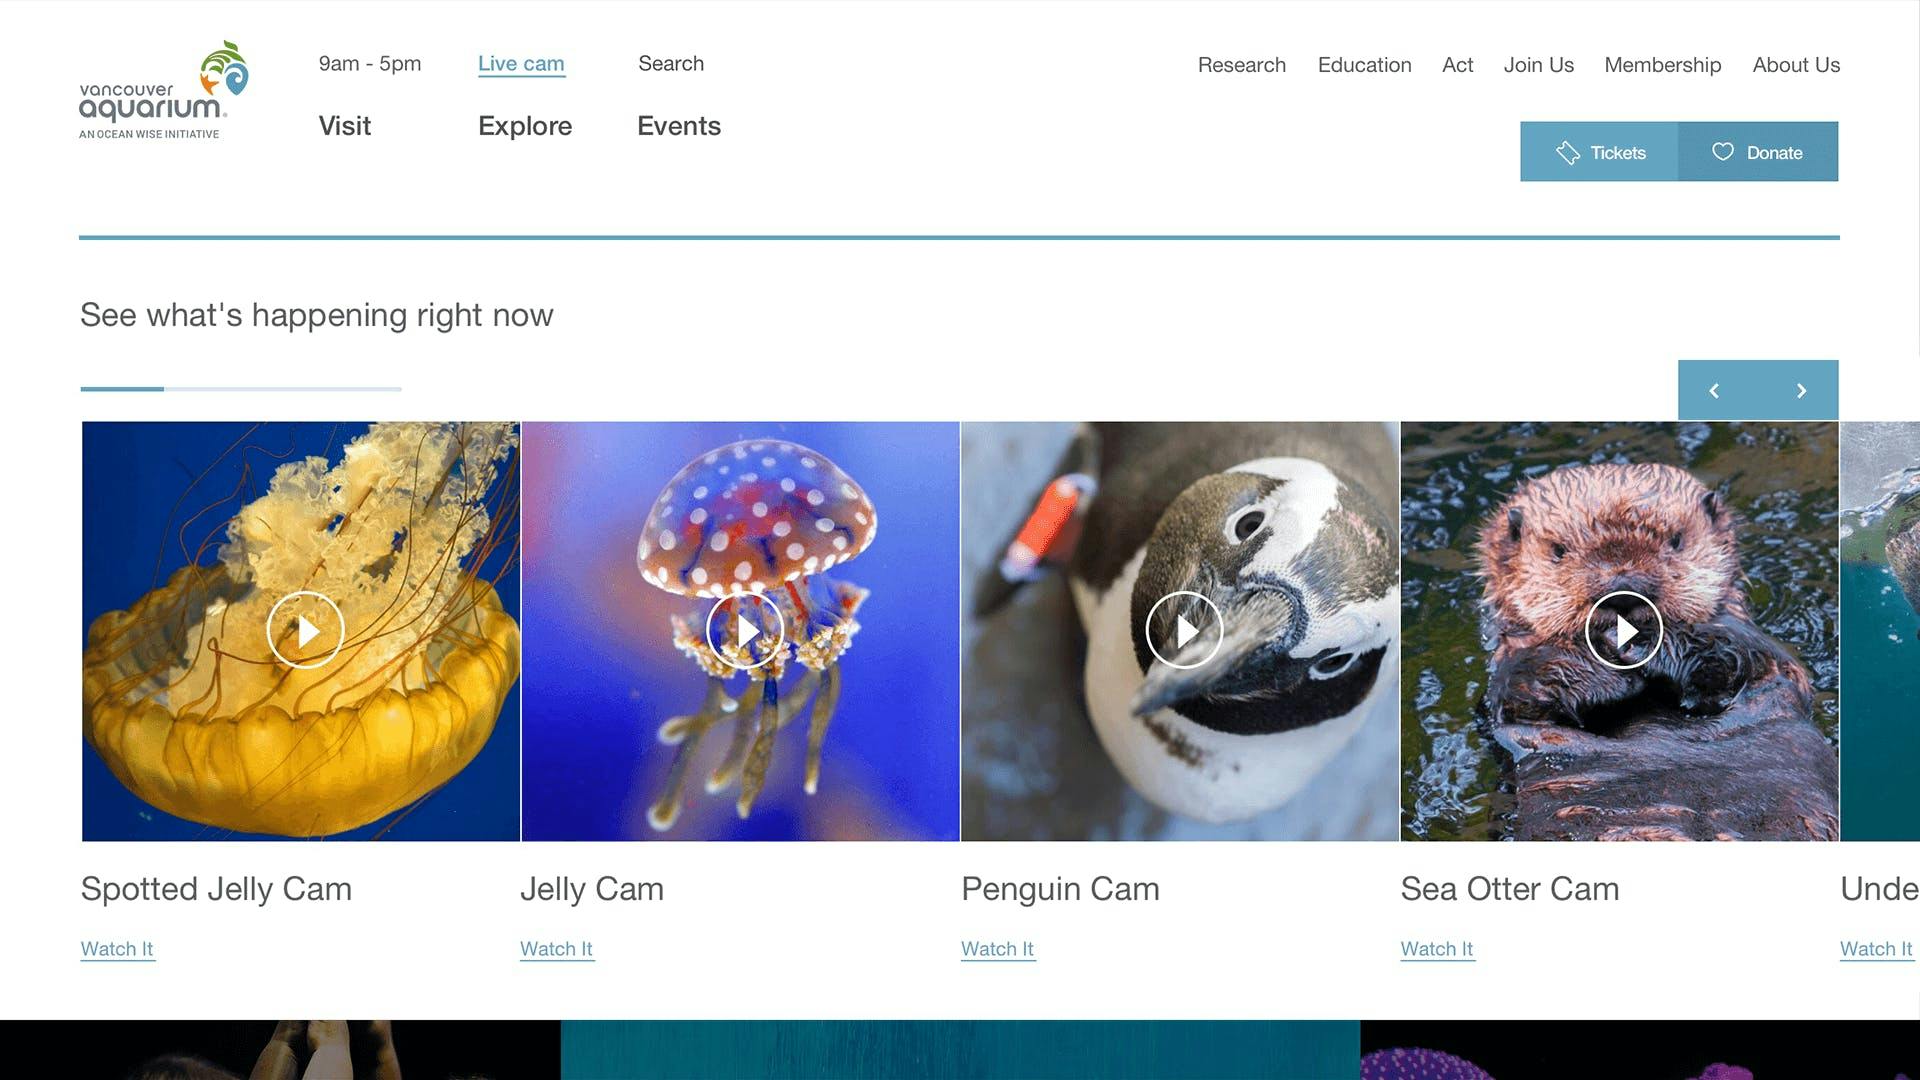 Vancouver Aquarium website elements: Spotted Jelly Cam, Jelly Cam, Penguin Cam, Sea Otter Cam